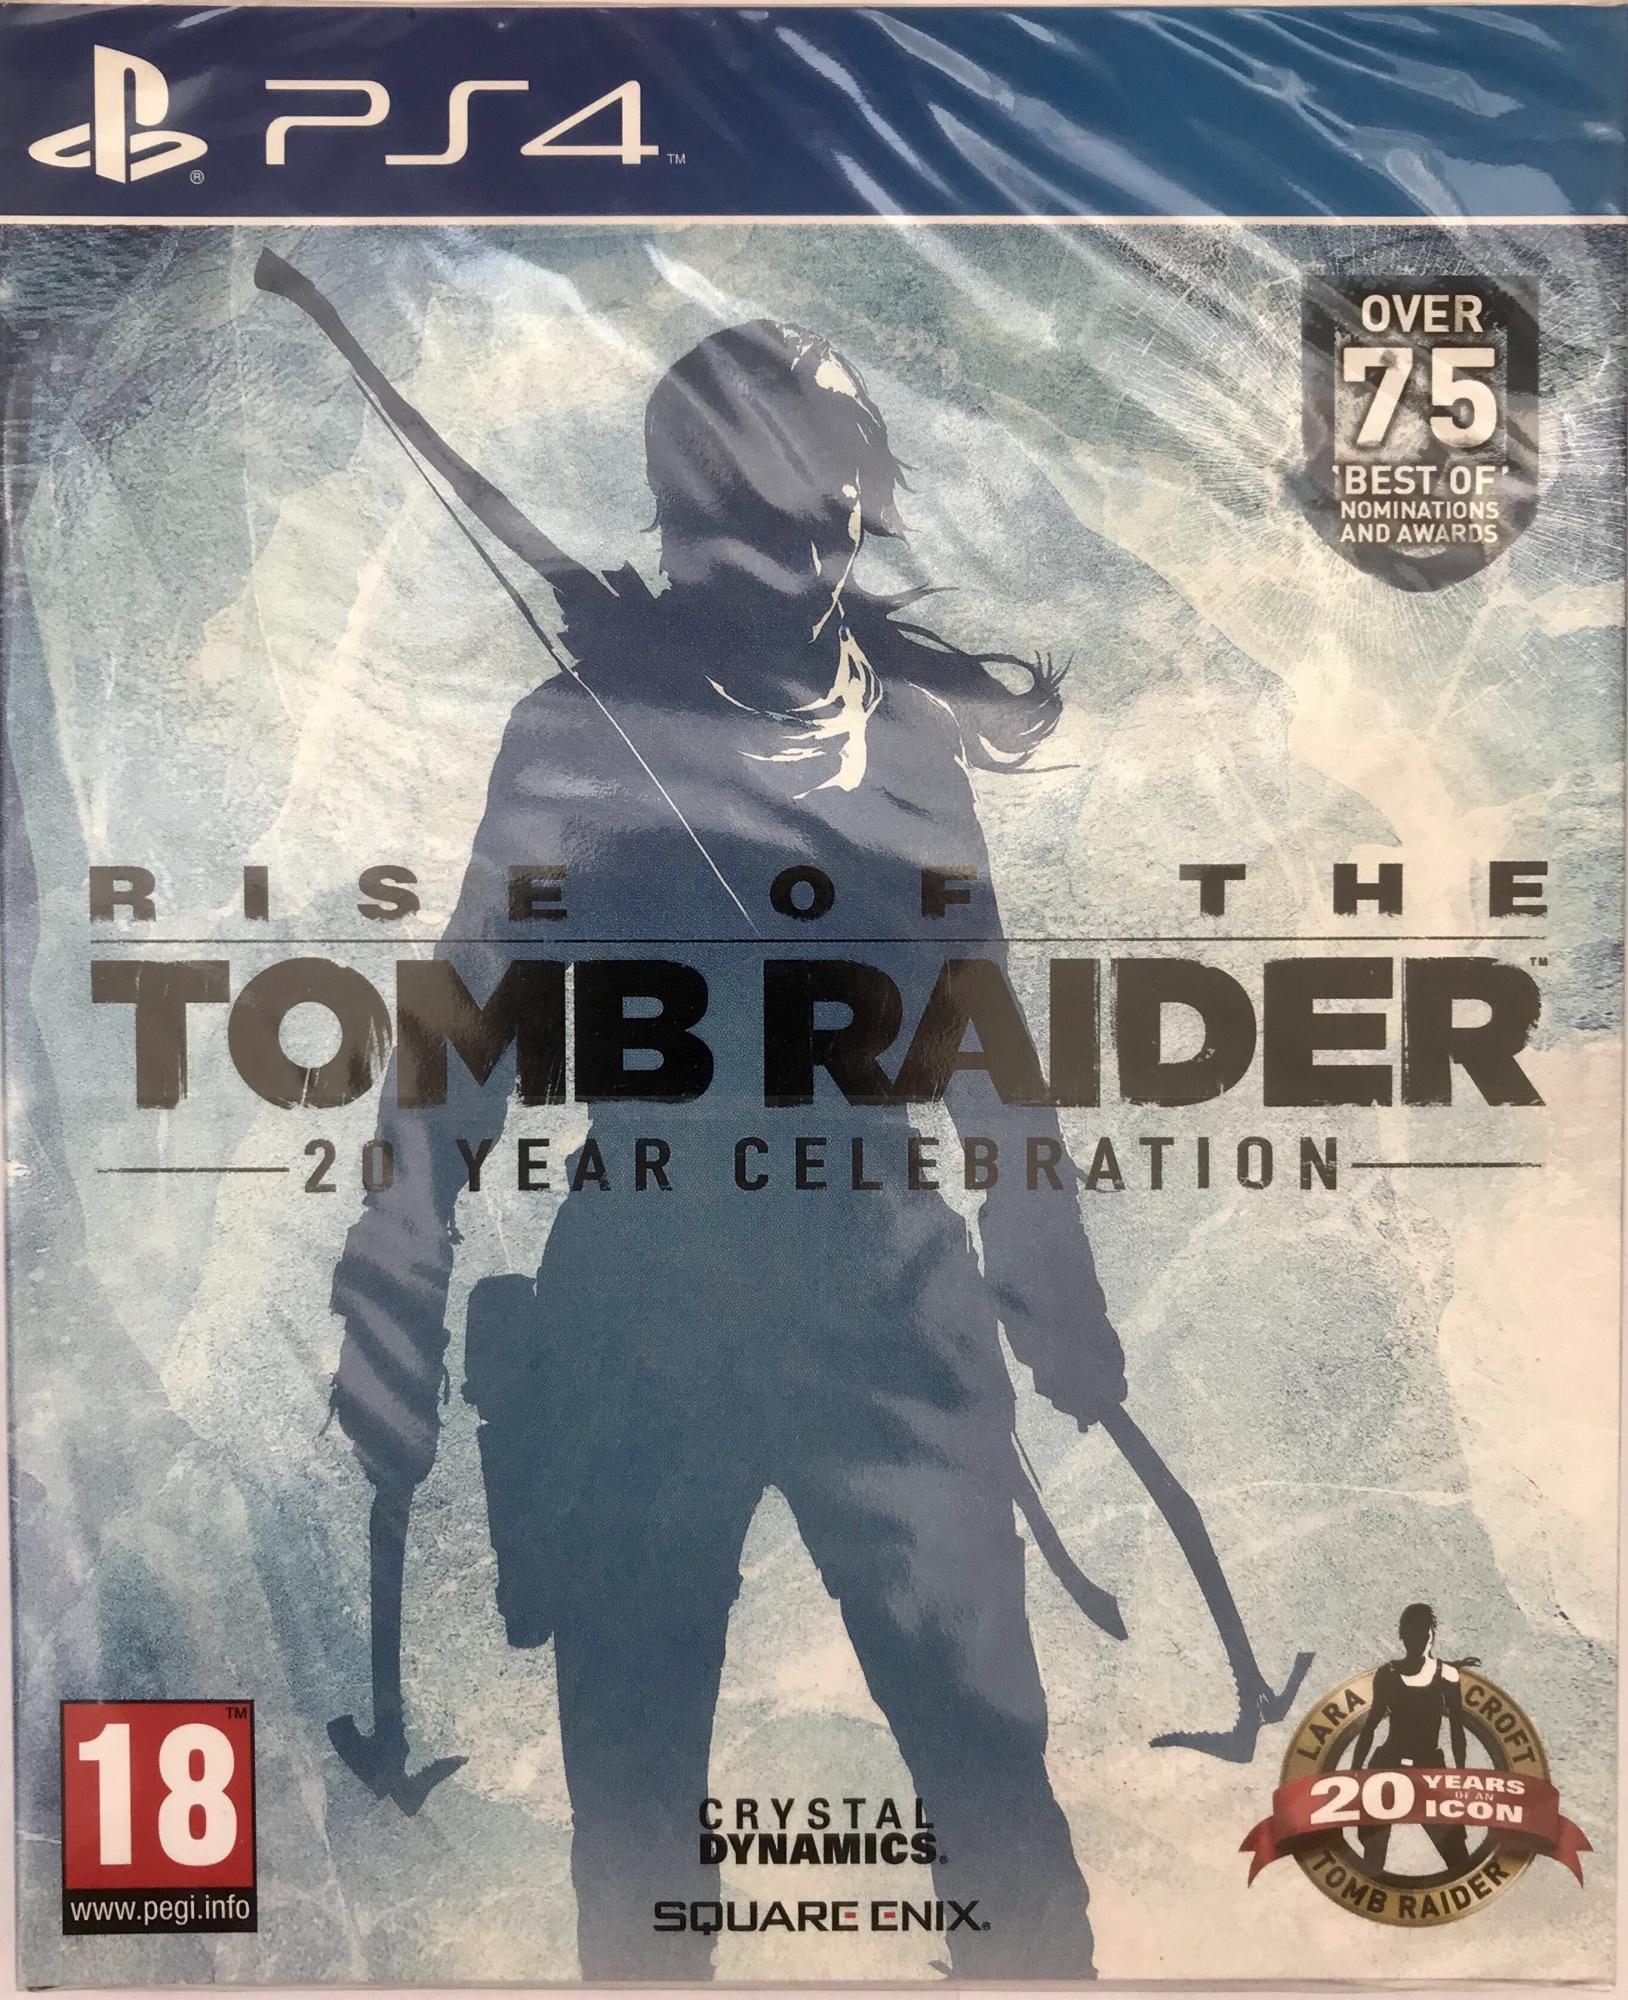 Игра Rise of the Tomb Raider: 20 year celebration 89265653838 купить 1